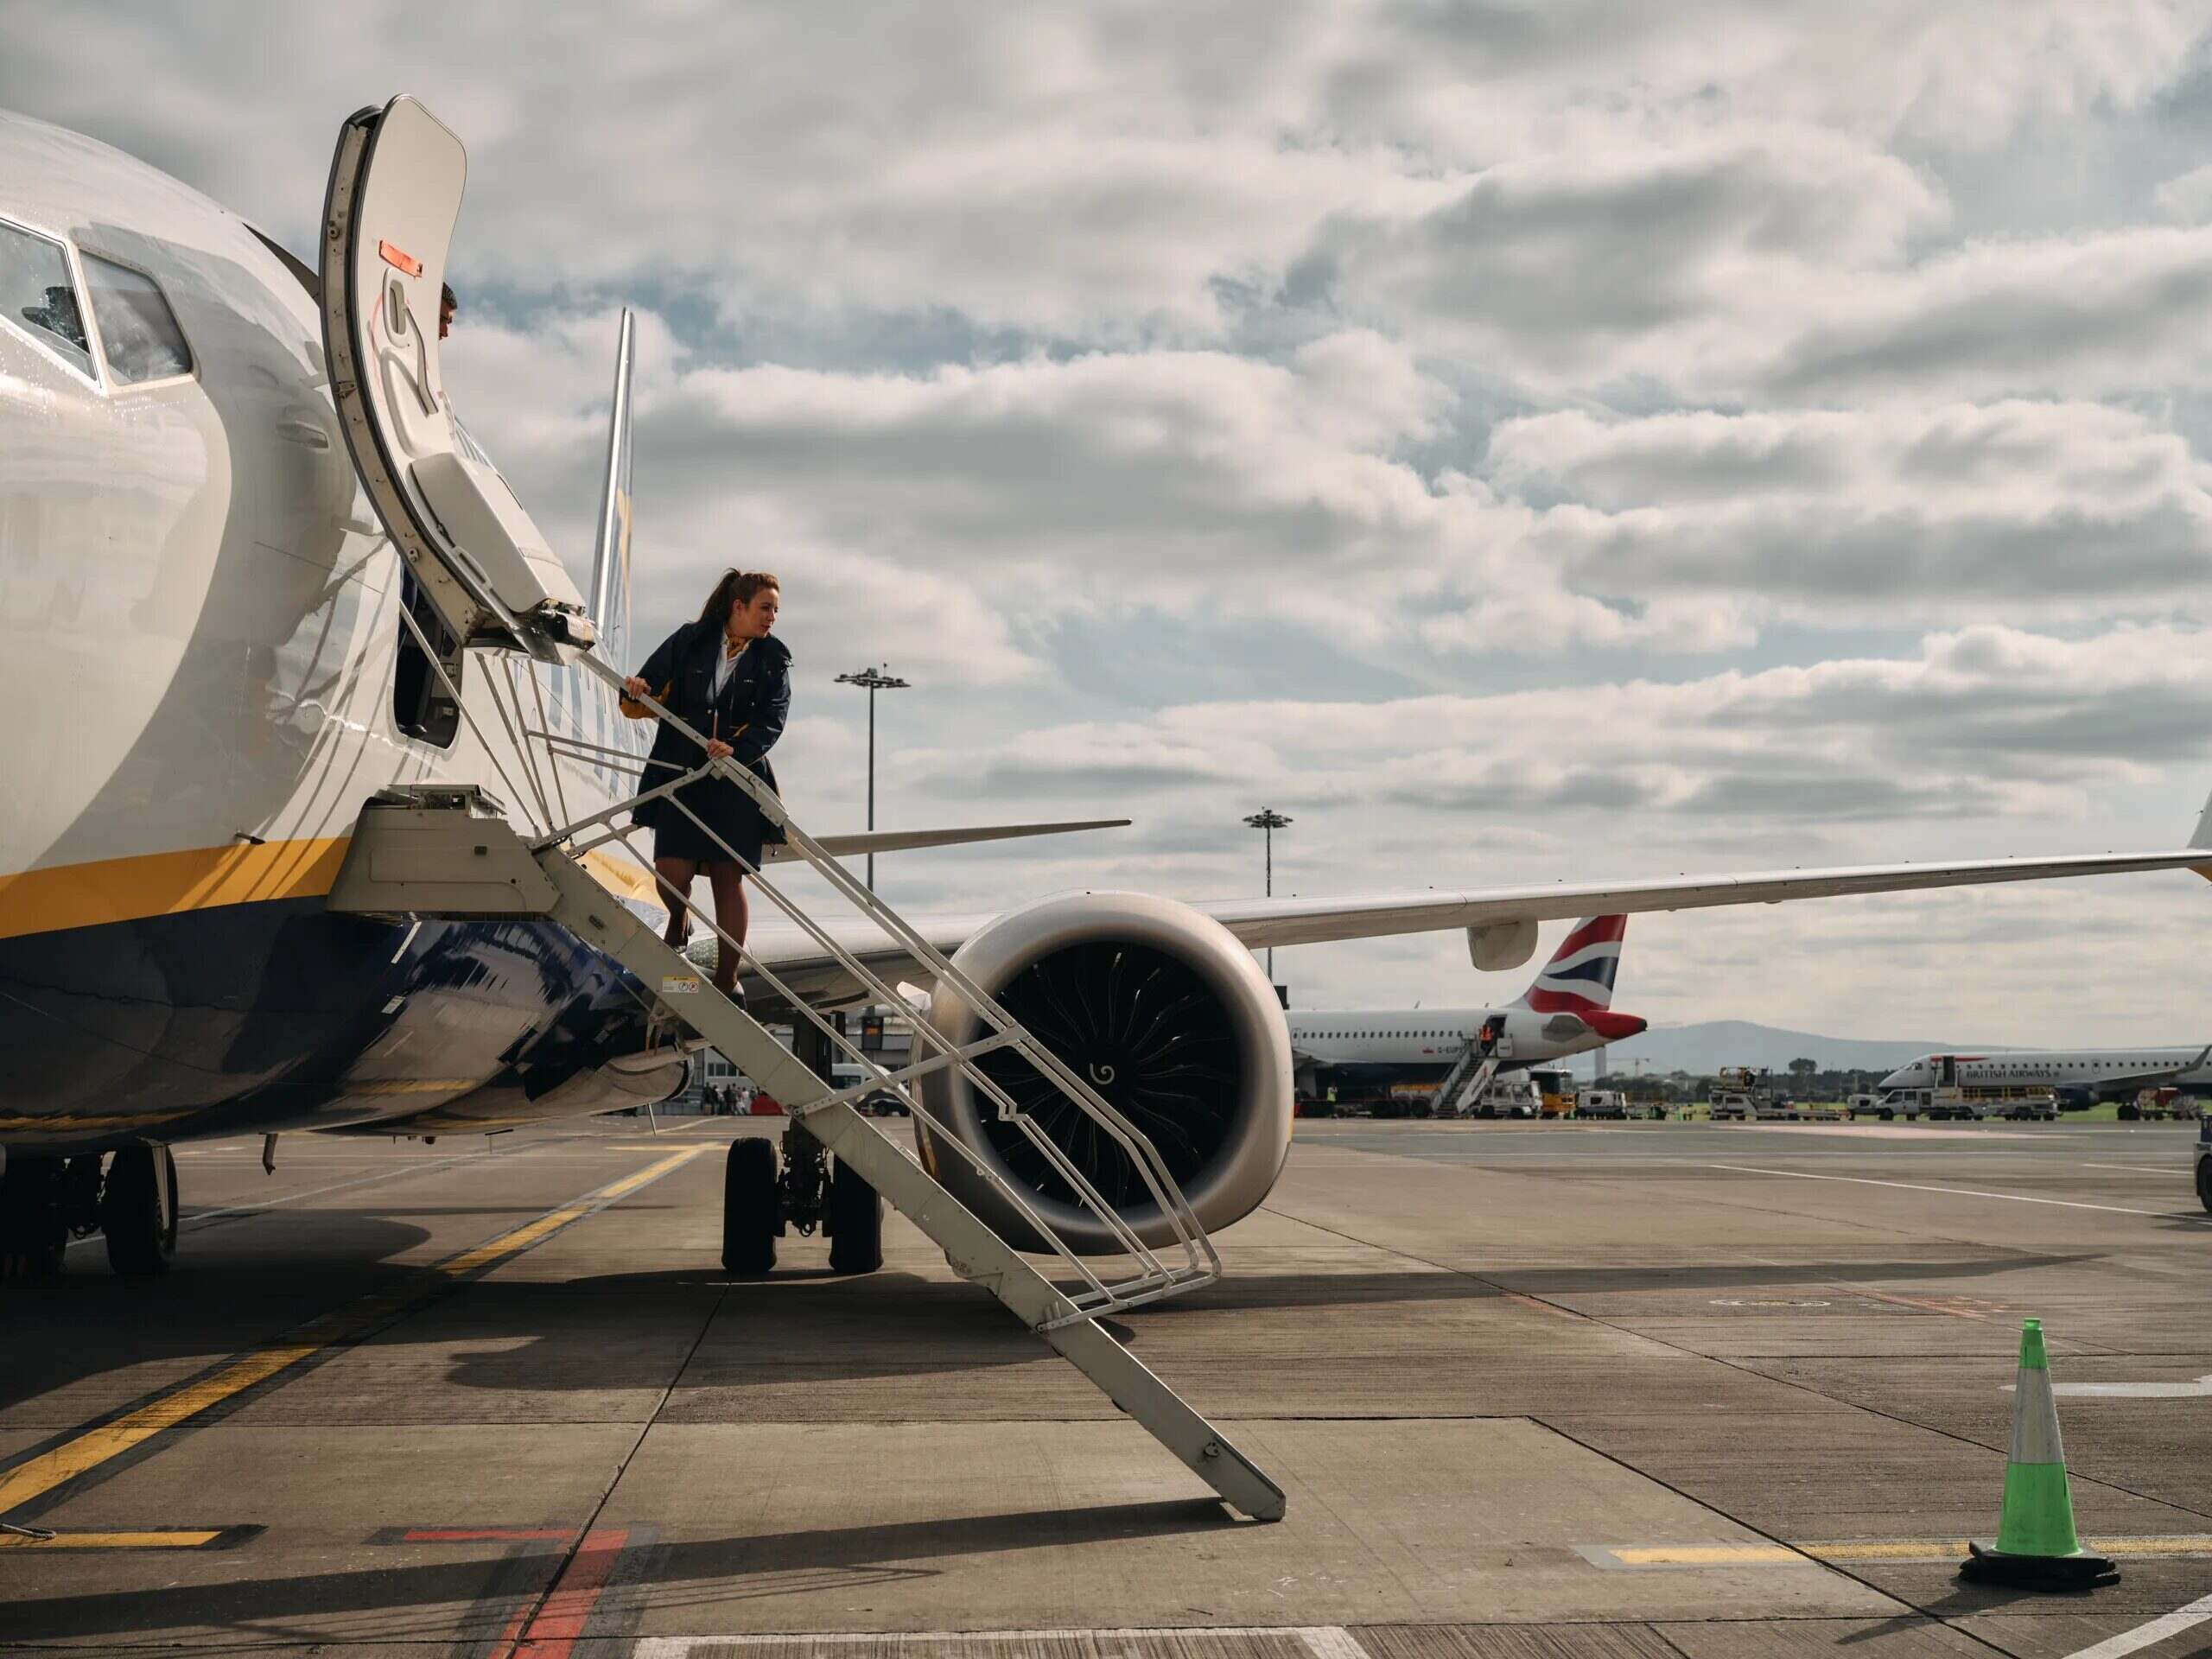 Ryanair Reveals Top City Break Destinations To Inspire Your May/June Travel Plans